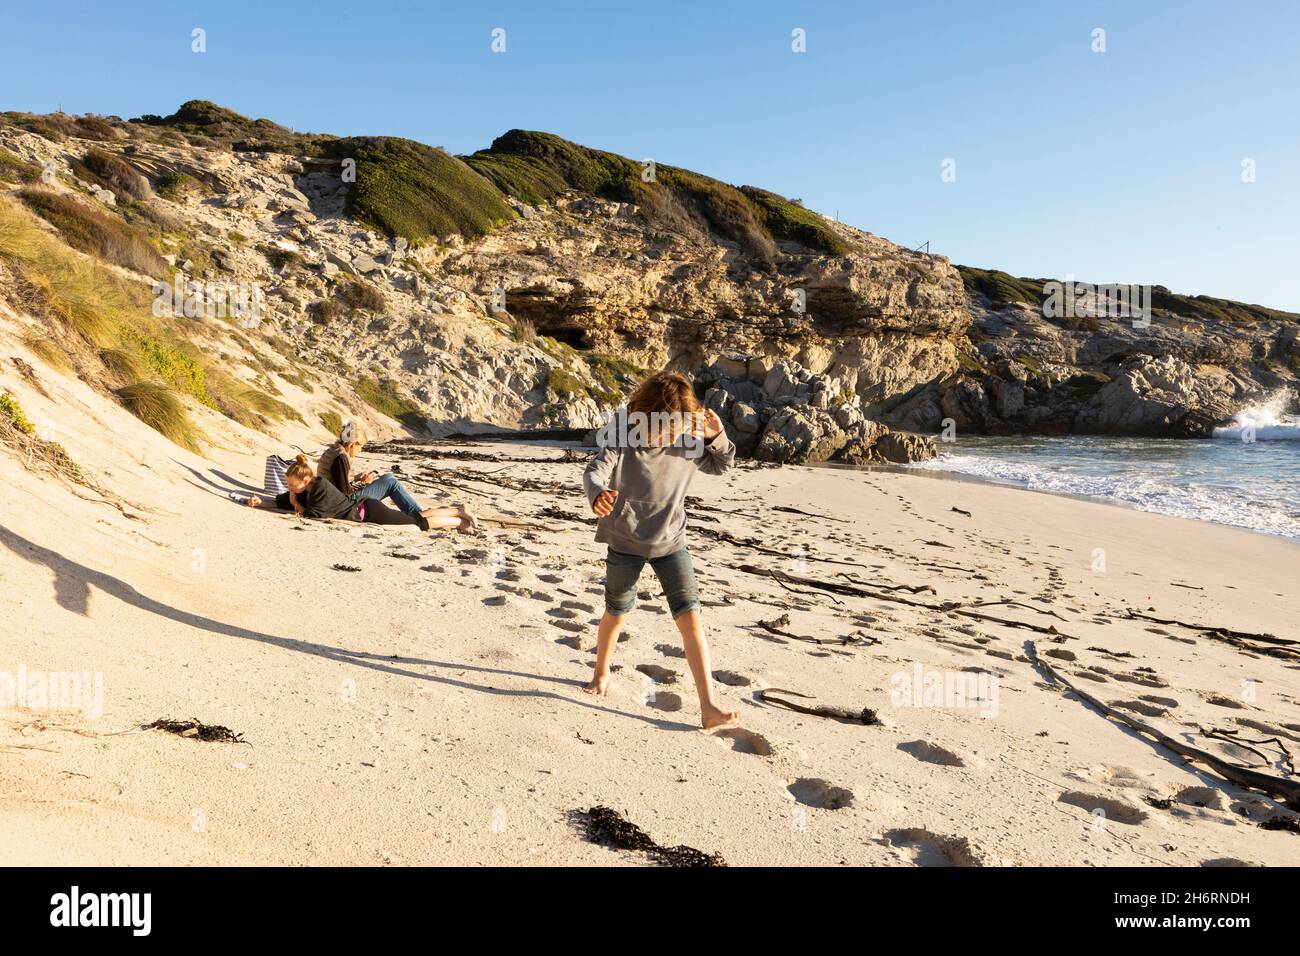 Family on a sandy beach, boy walking through soft sand Stock Photo